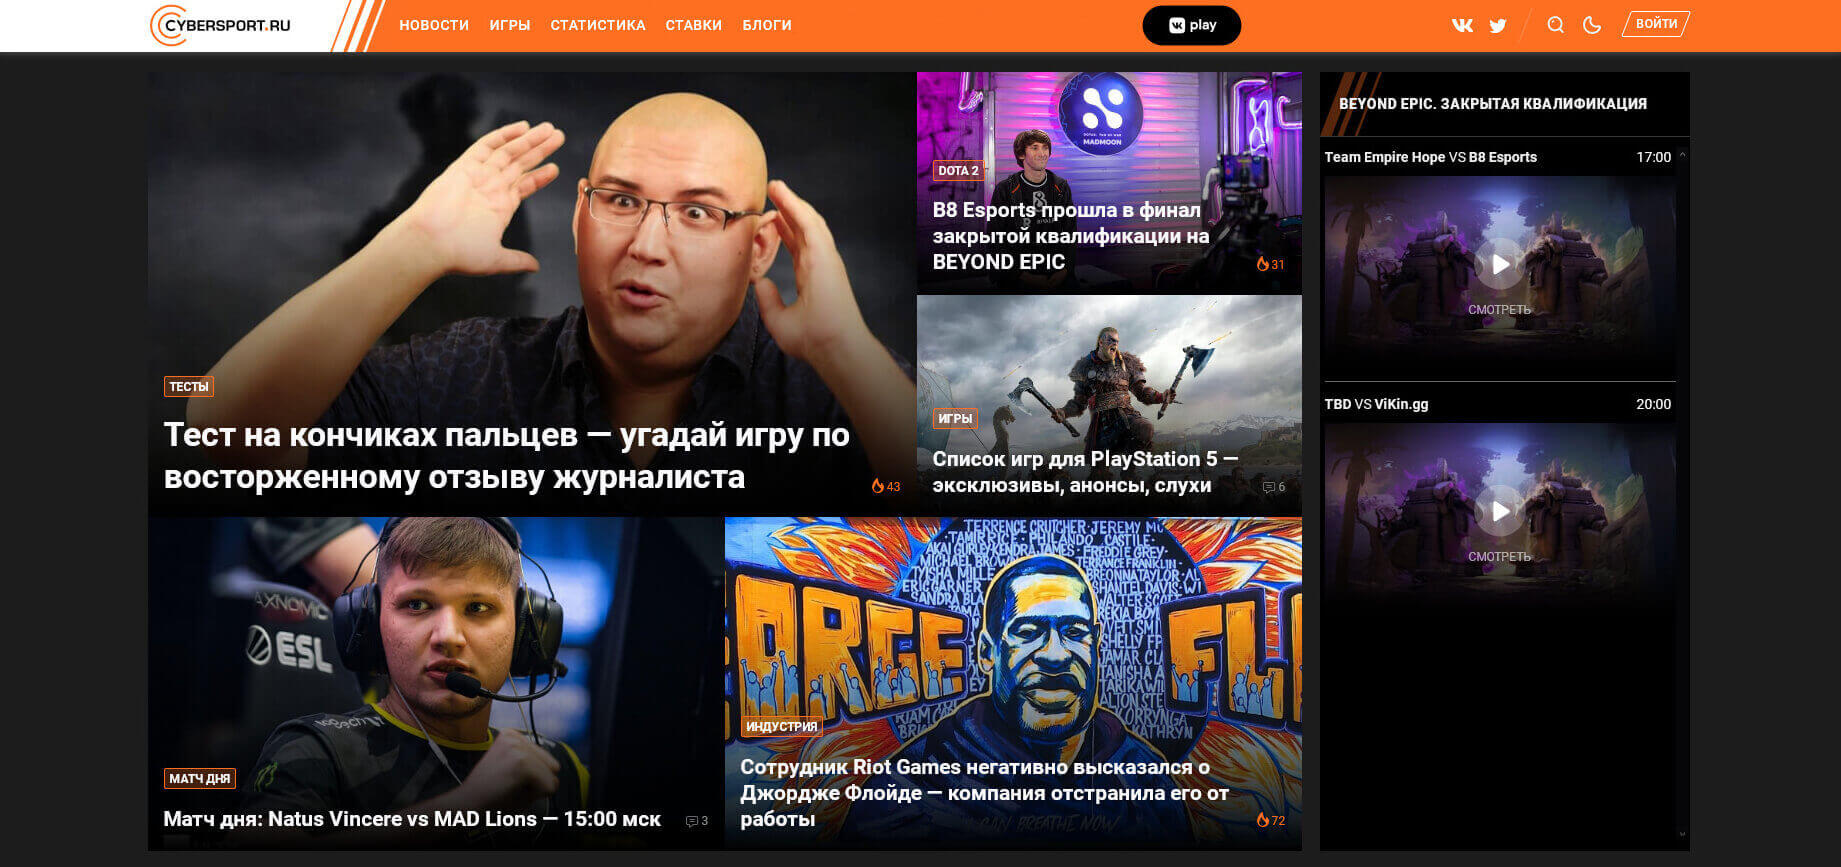 главная / cybersport.ru